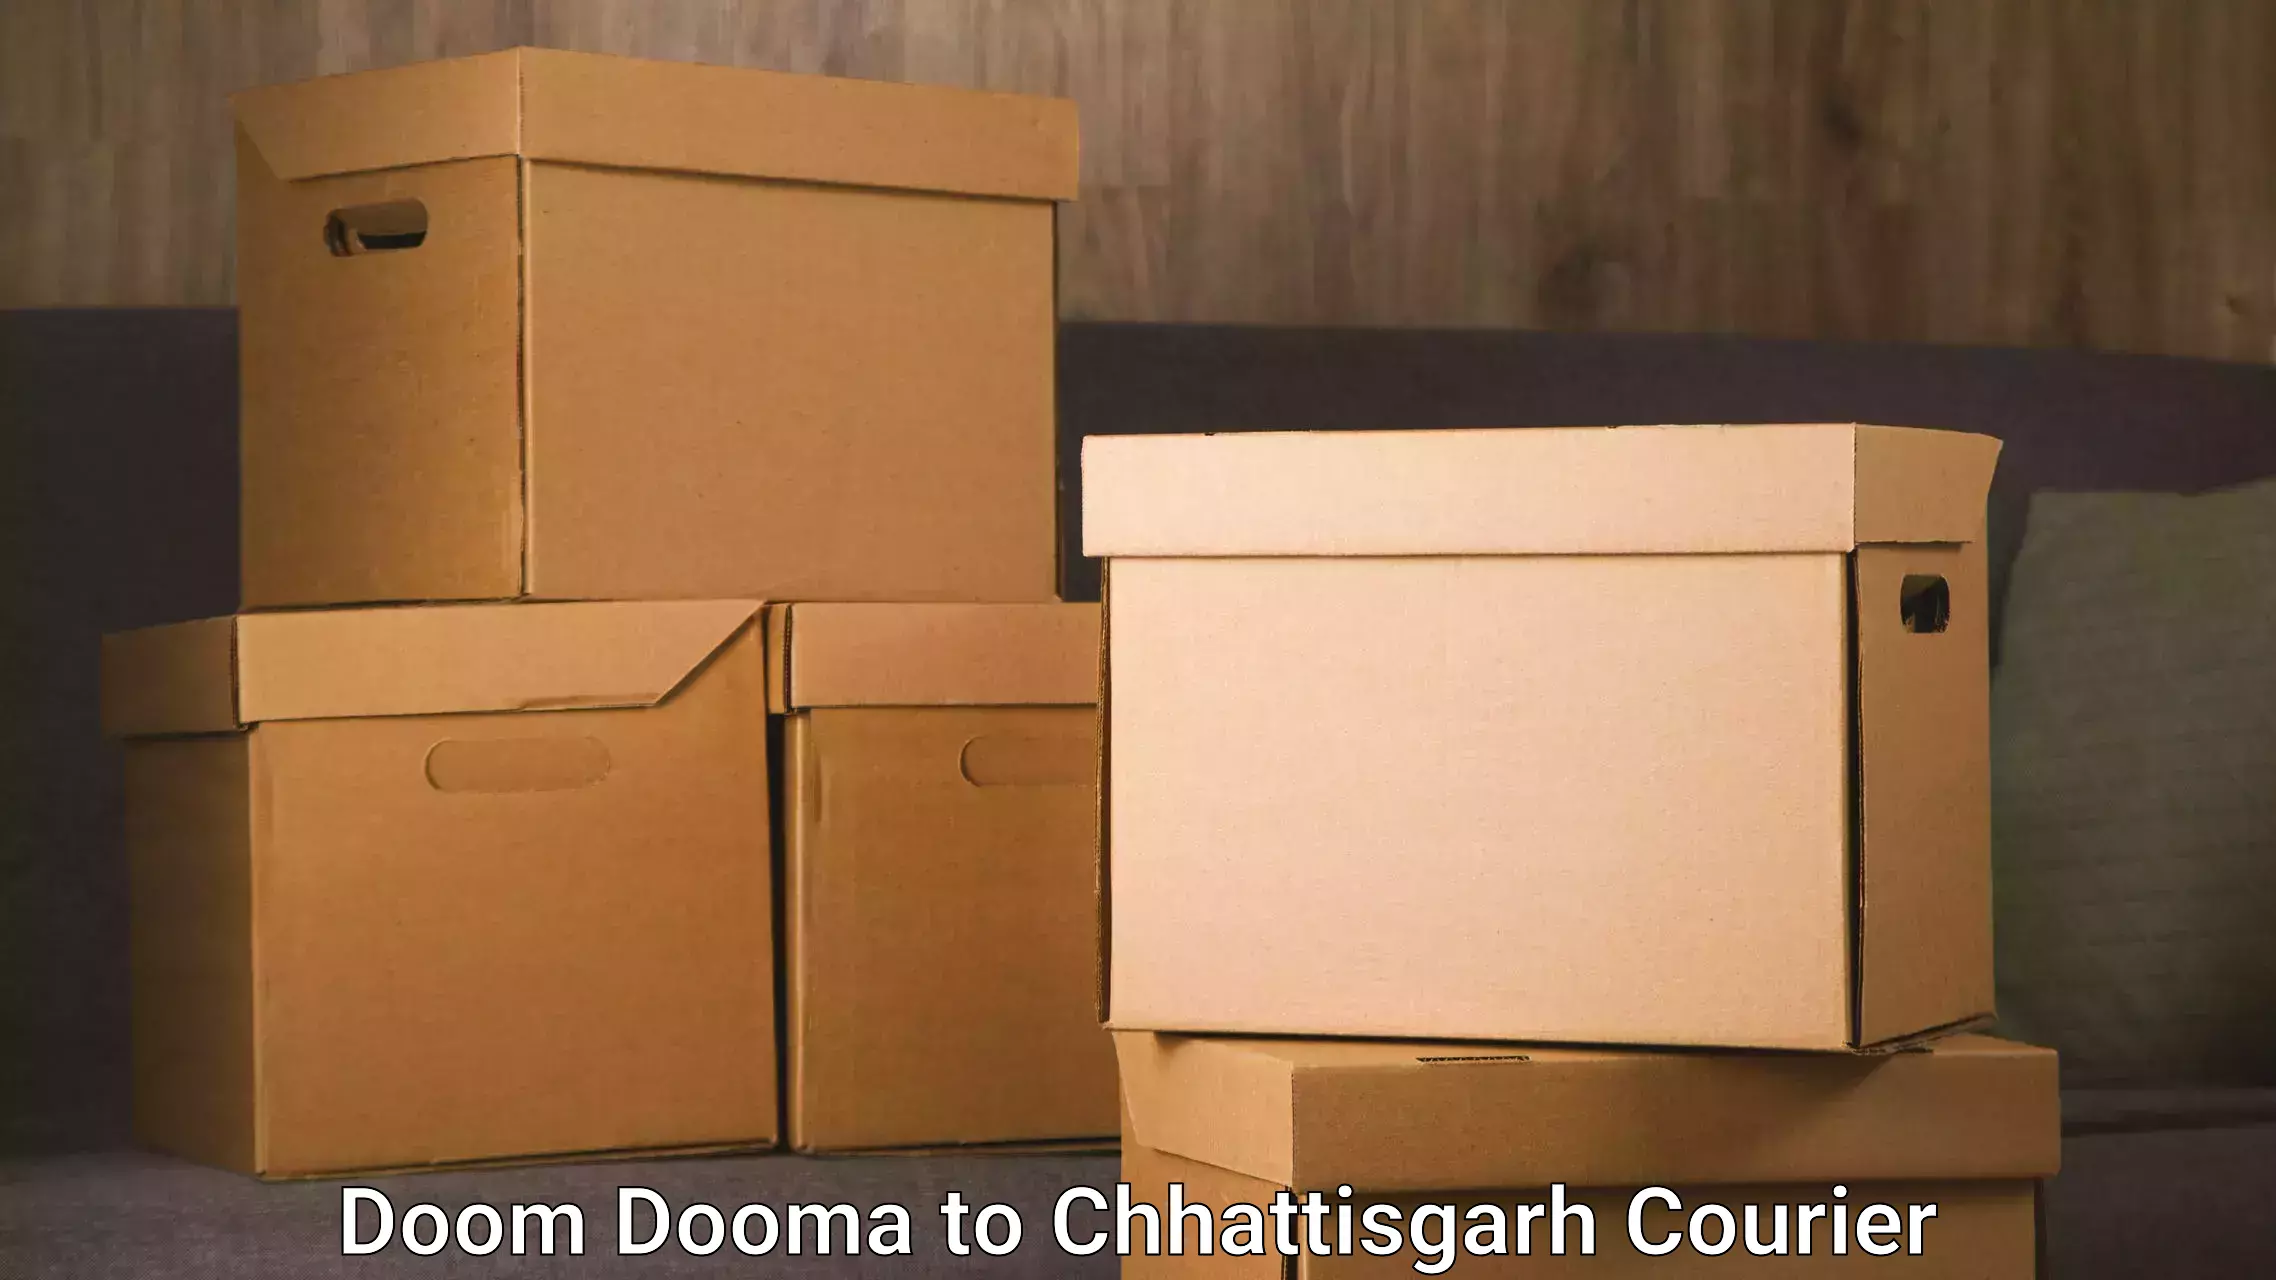 Courier service partnerships Doom Dooma to Nagri